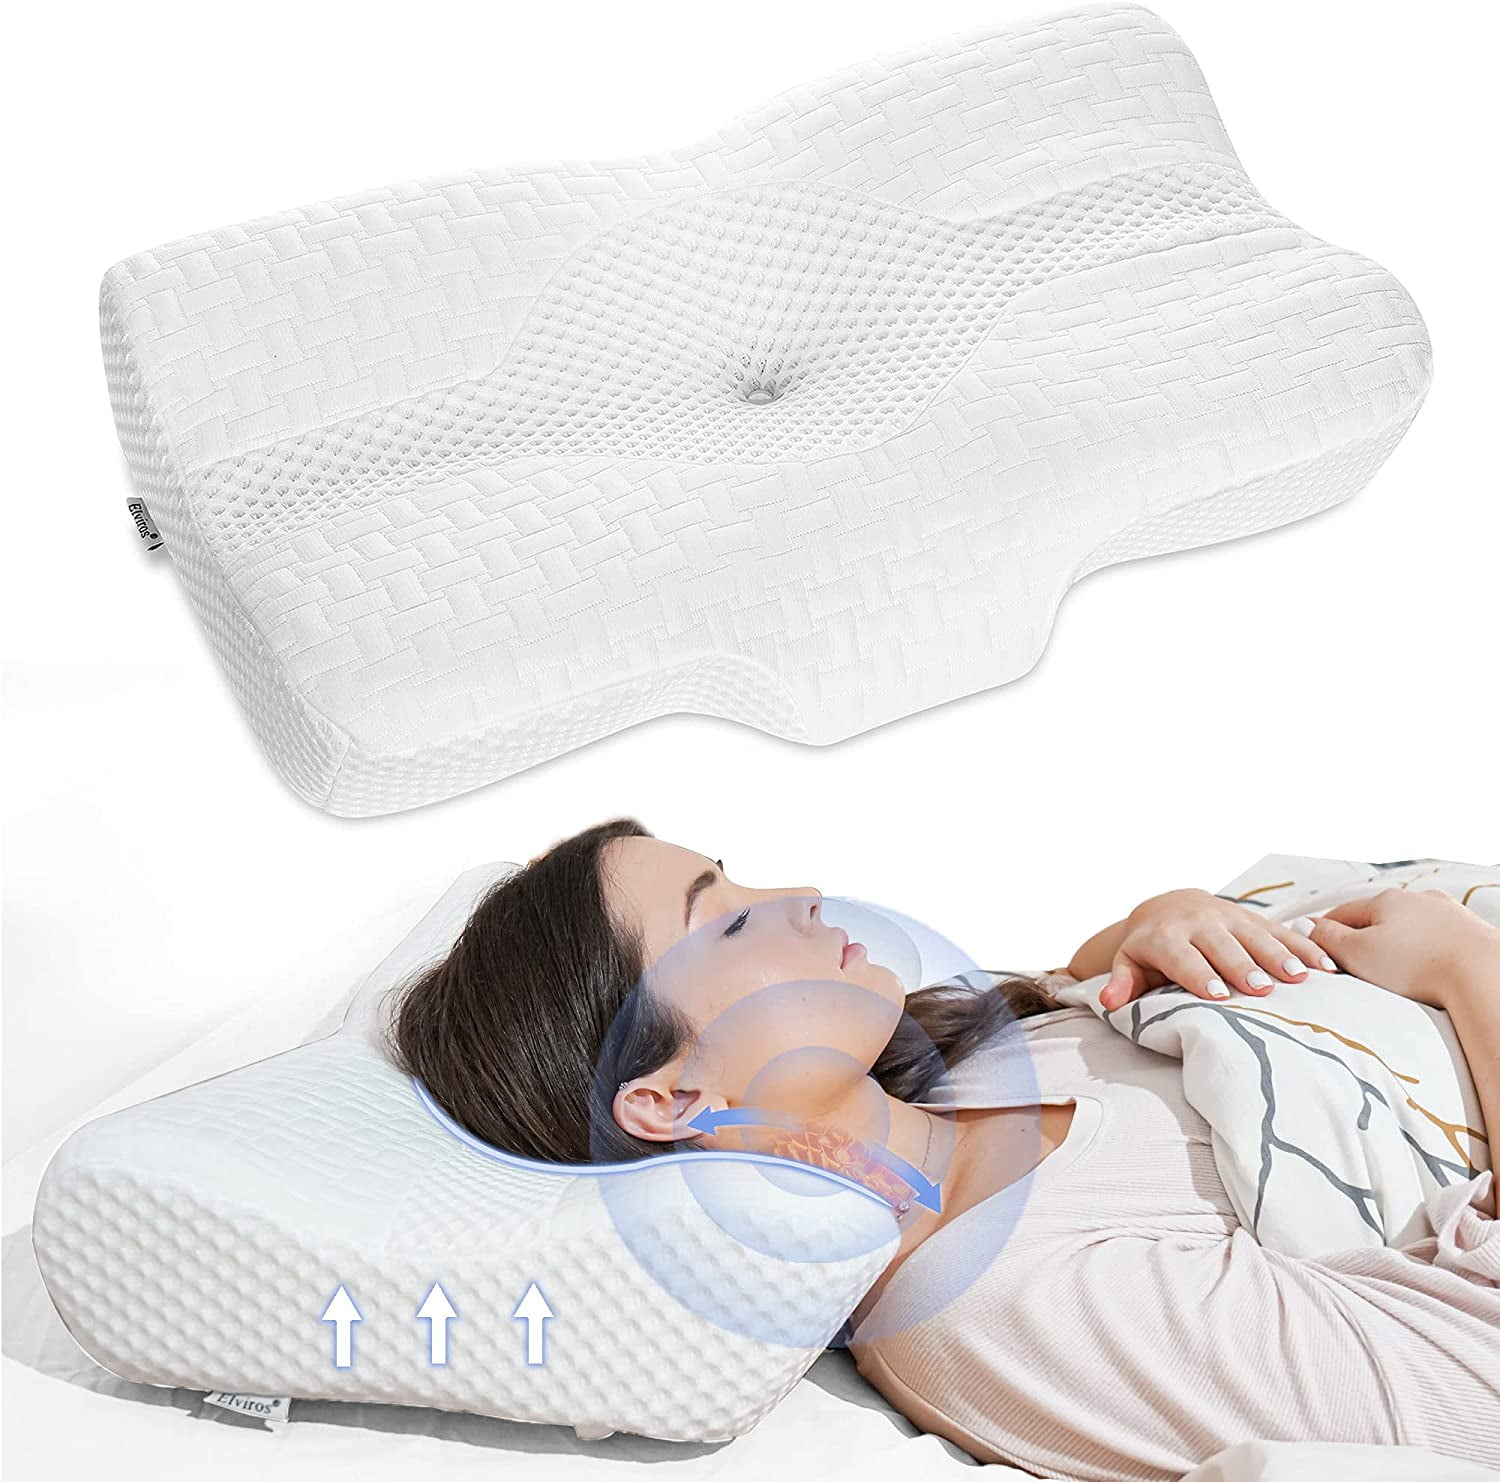 Elviros Cervical Pillow, Memory Foam Bed Pillows for Neck Pain